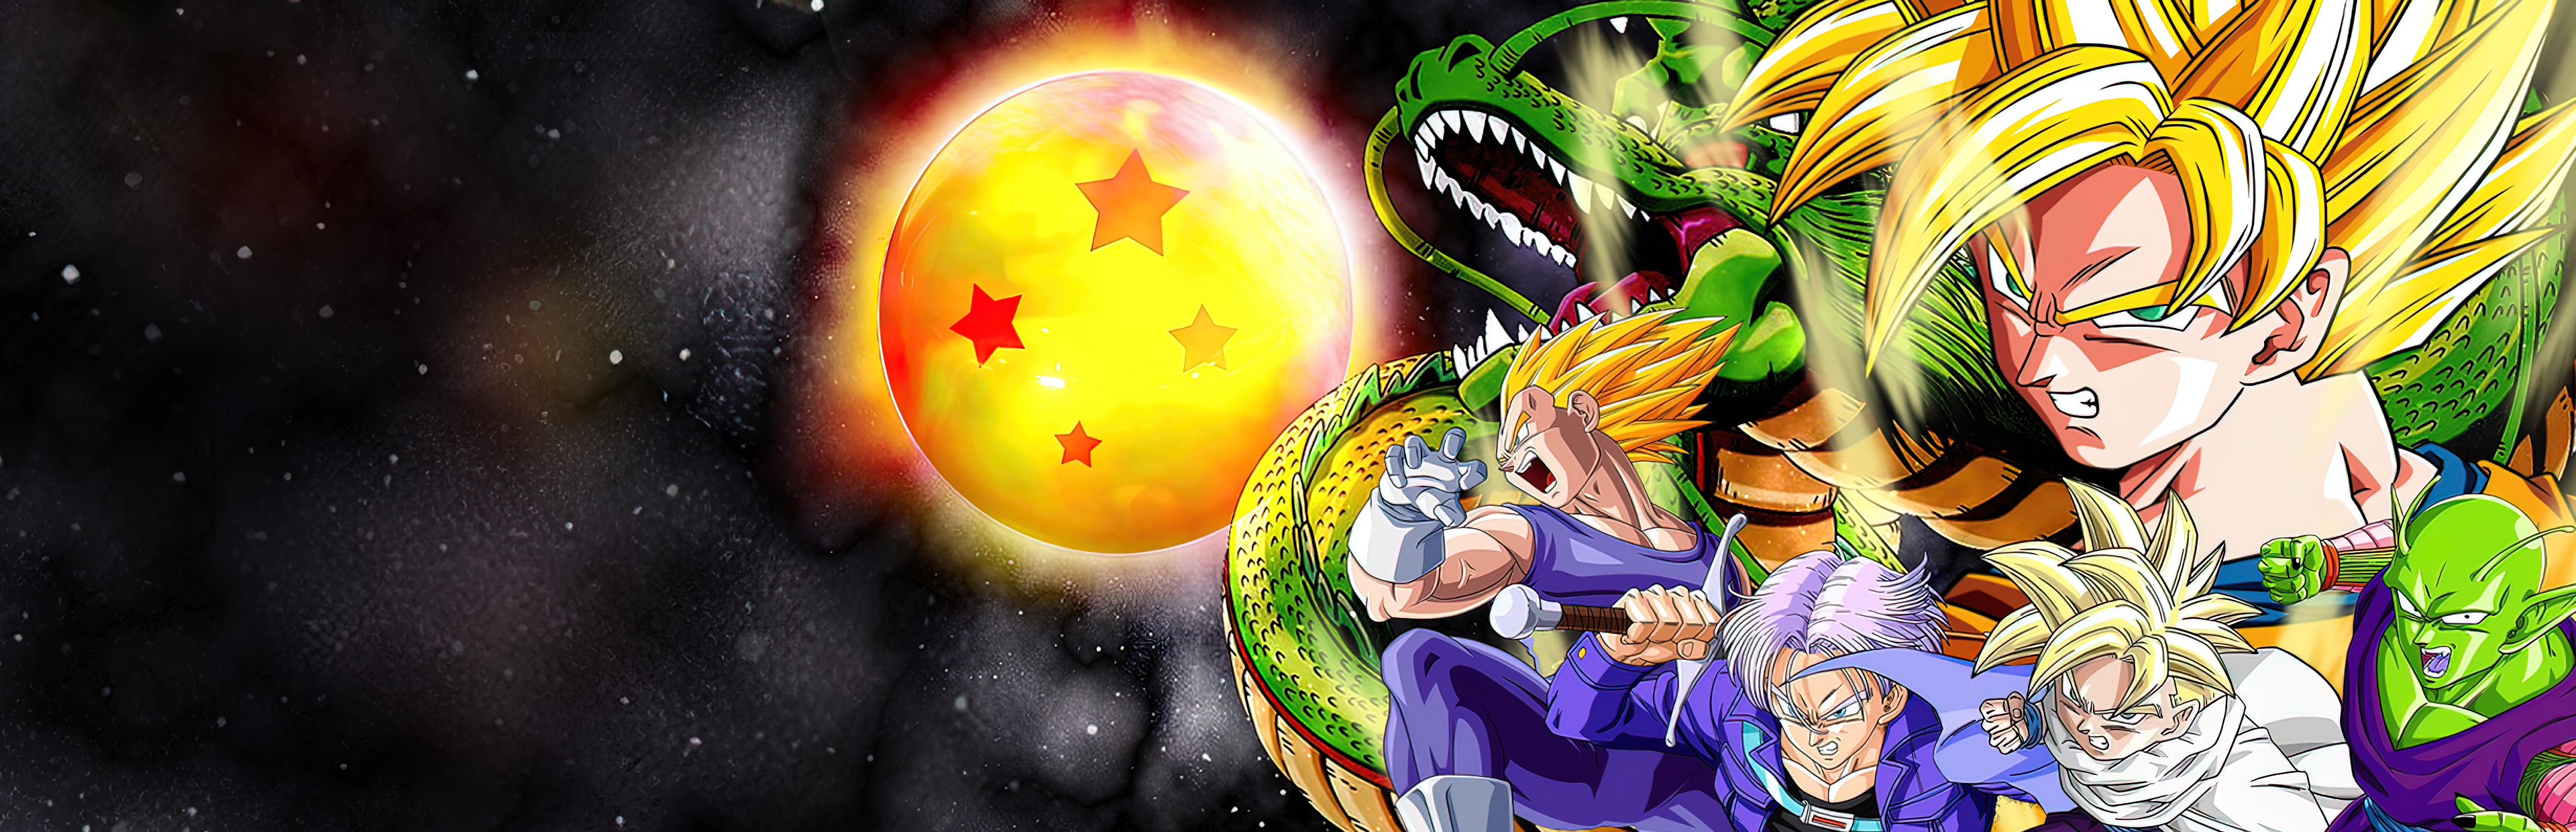 Stream Dragon Ball Z: Budokai Tenkaichi 3 - Super Survivor by  Ultimonionitryx